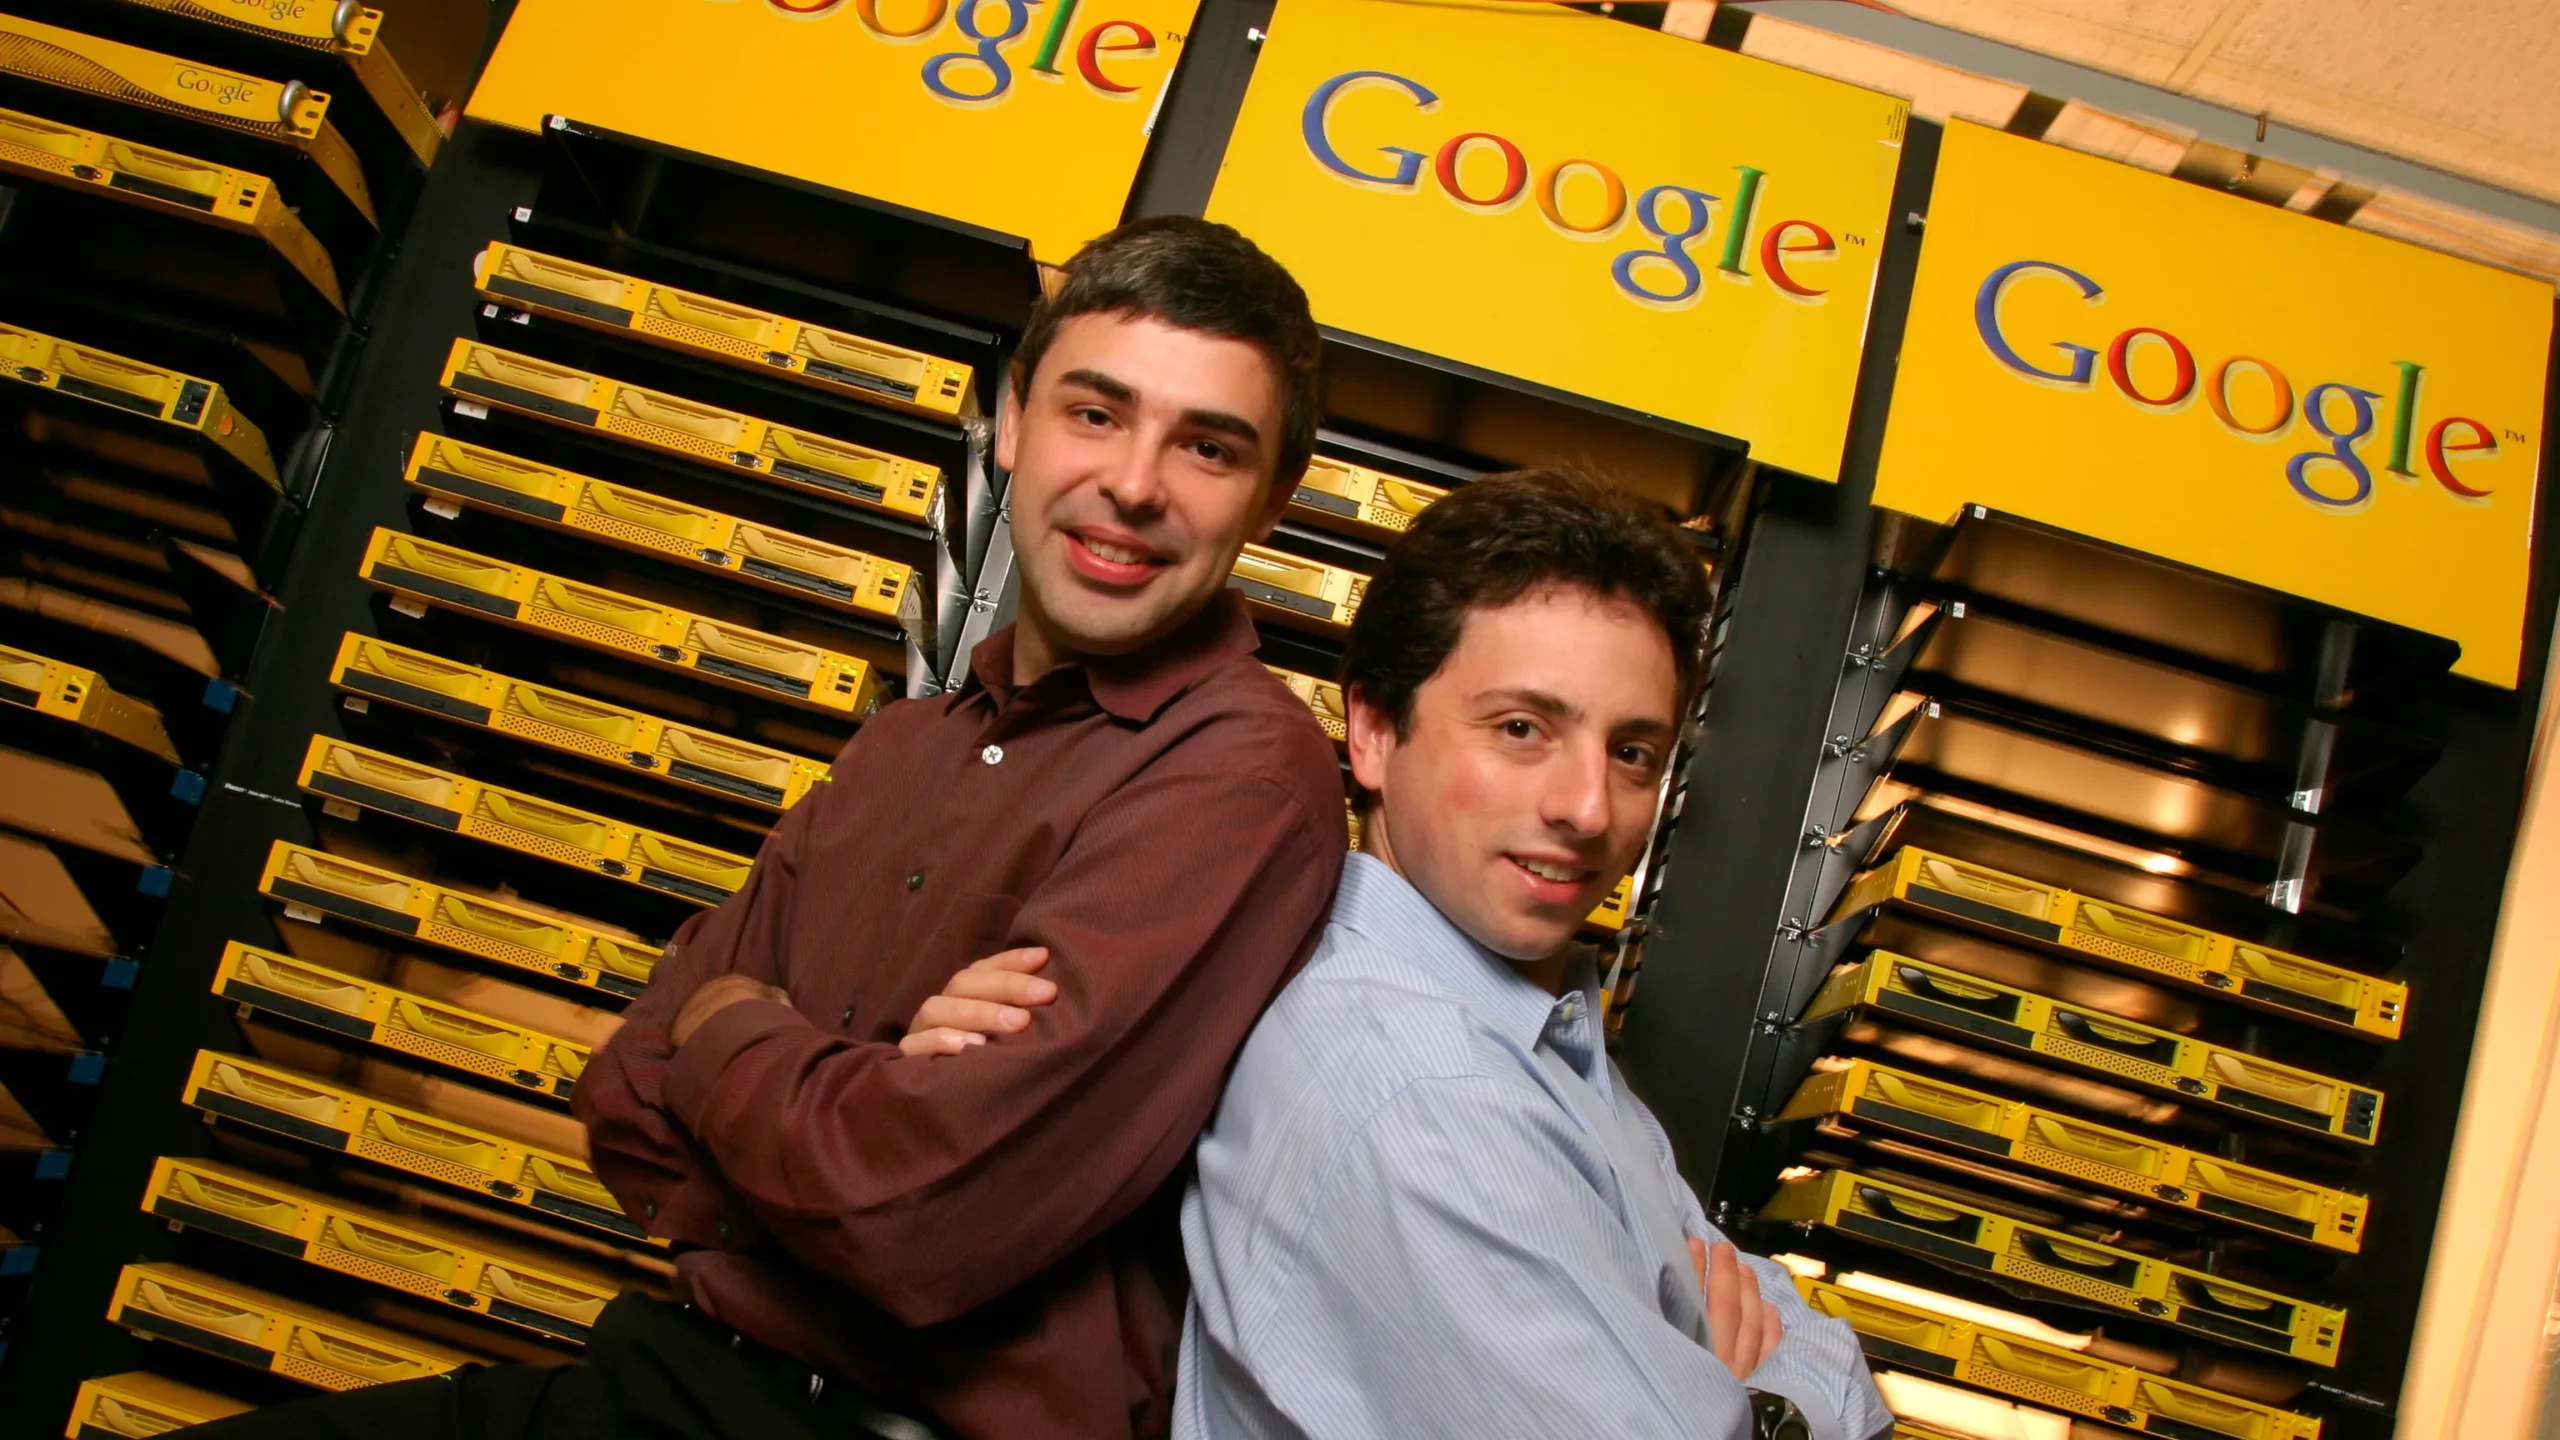 google founders